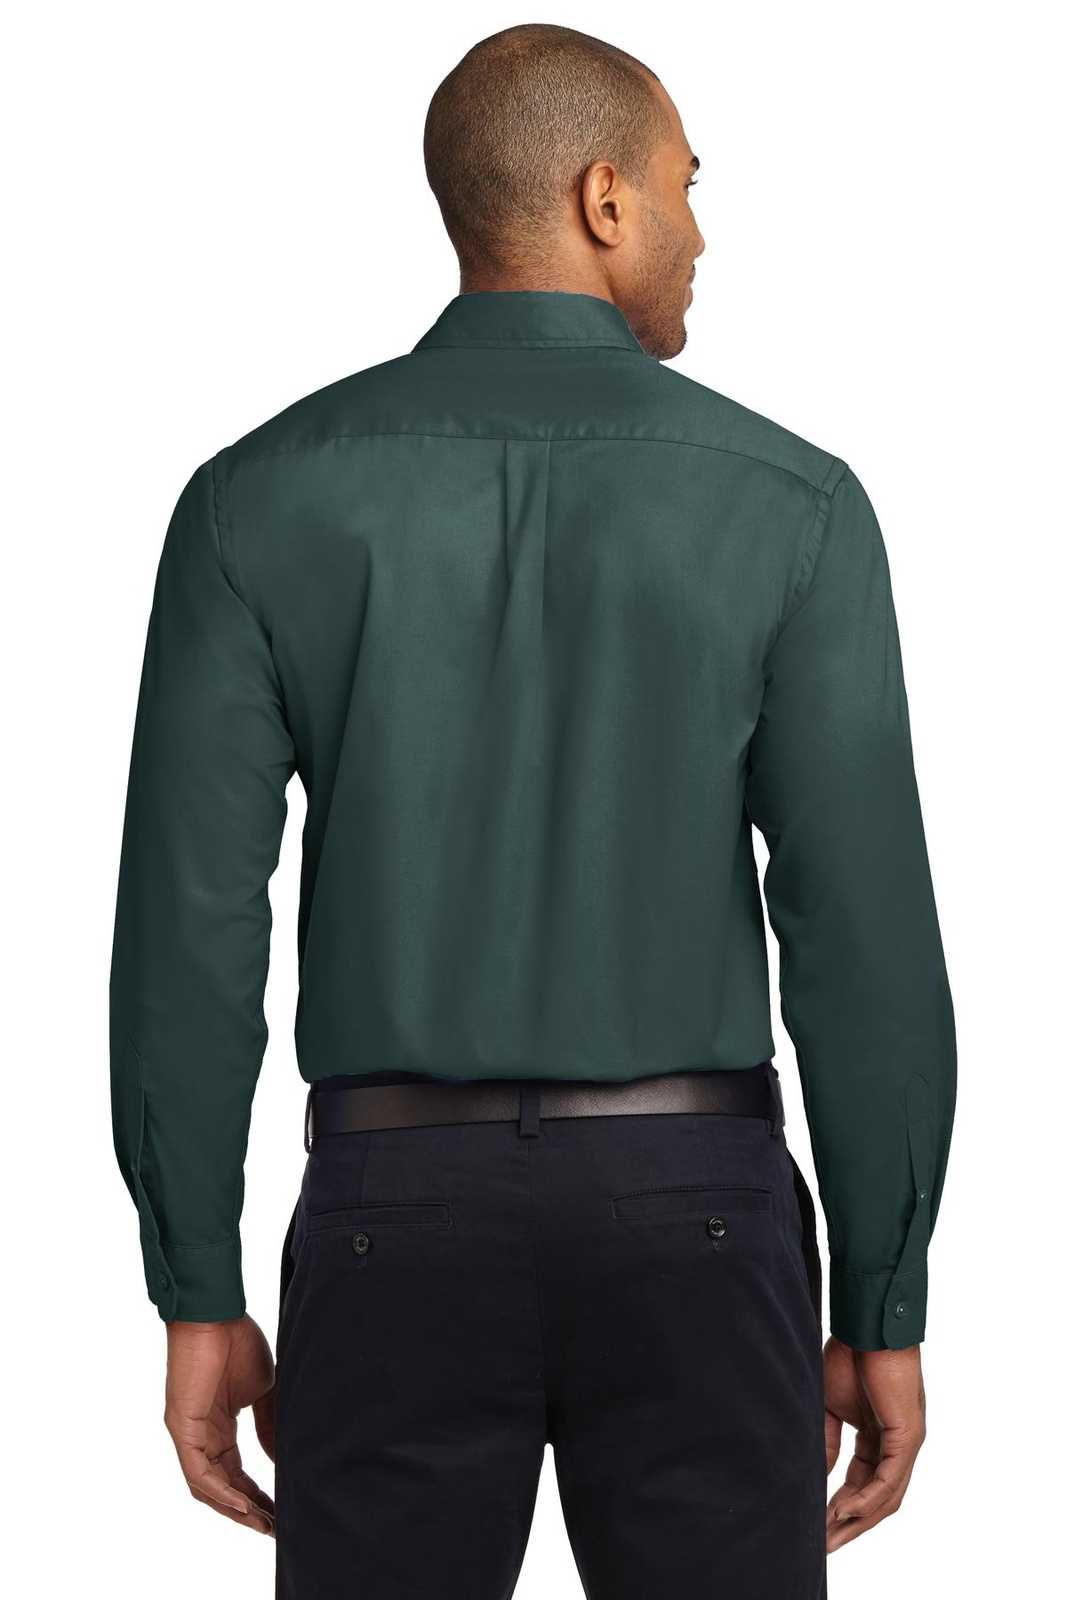 Port Authority TLS608 Tall Long Sleeve Easy Care Shirt - Dark Green Navy - HIT a Double - 1